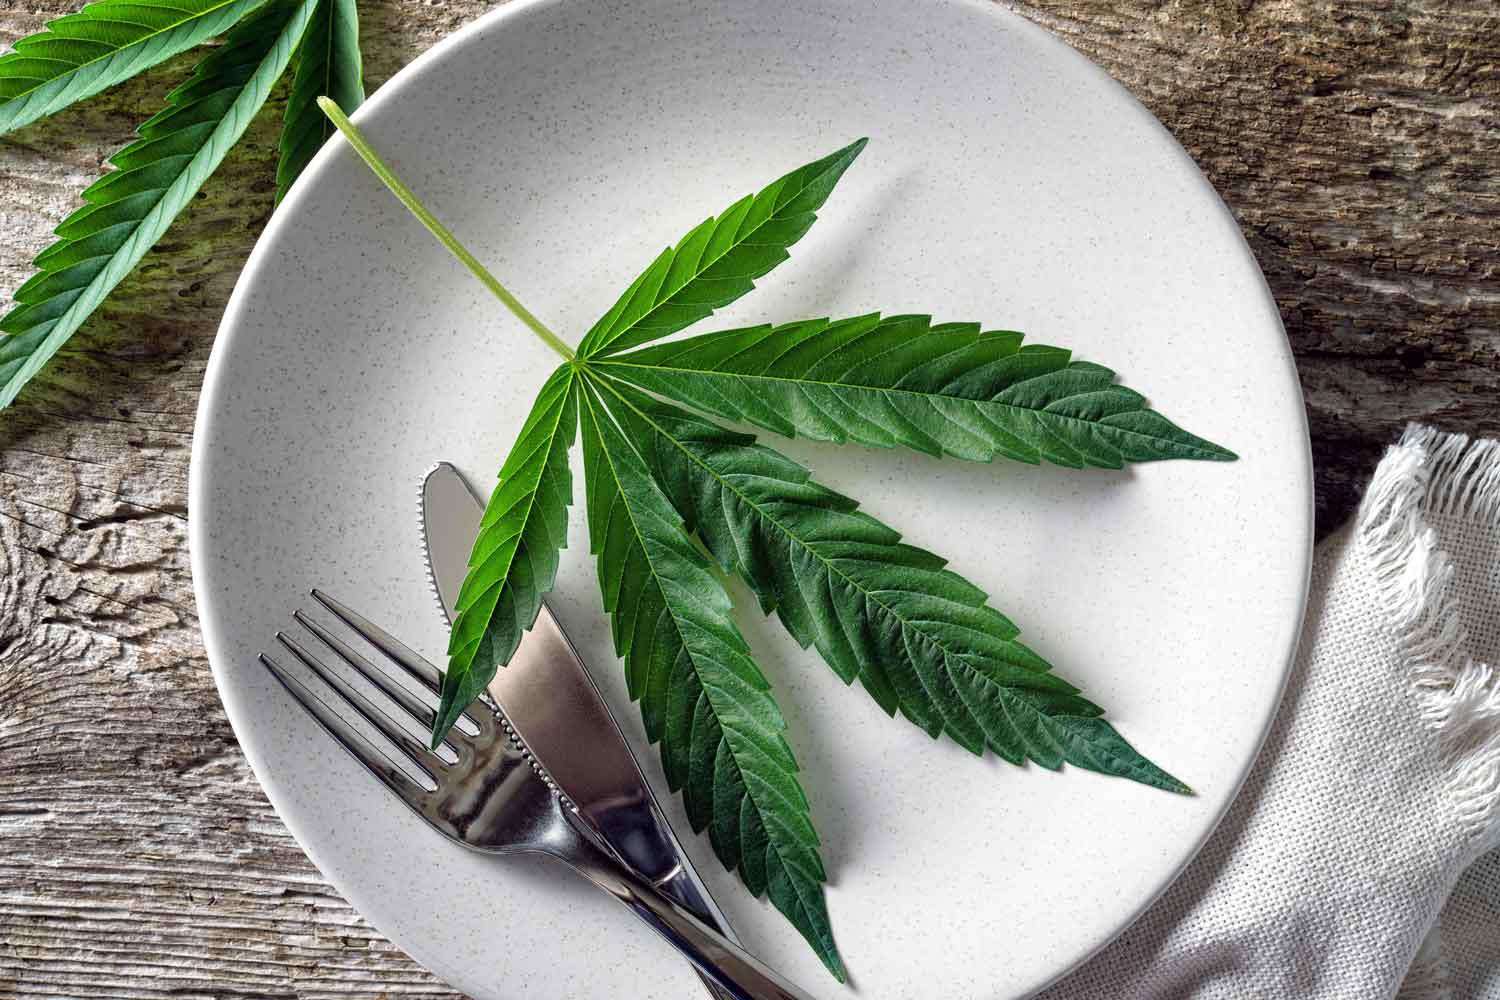 Culinary Cannabis